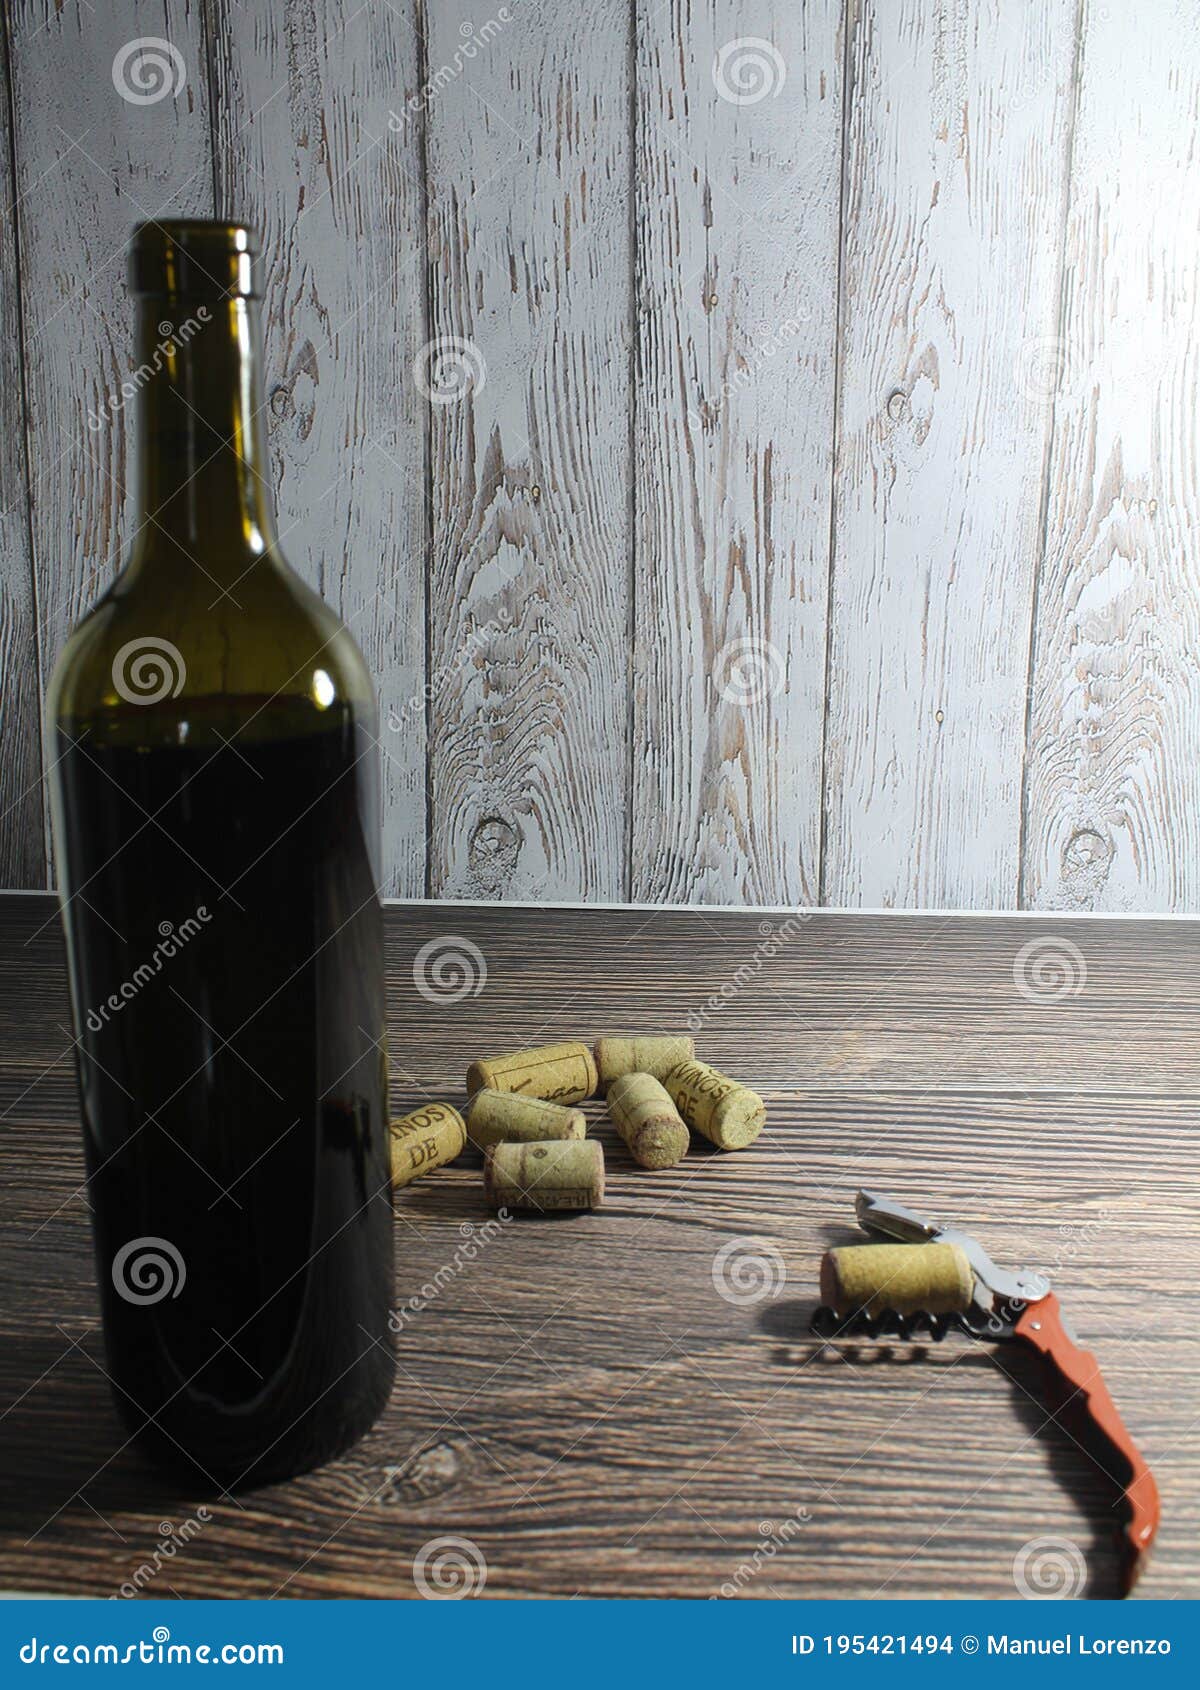 cork bottle wine corks plug beautiful smell